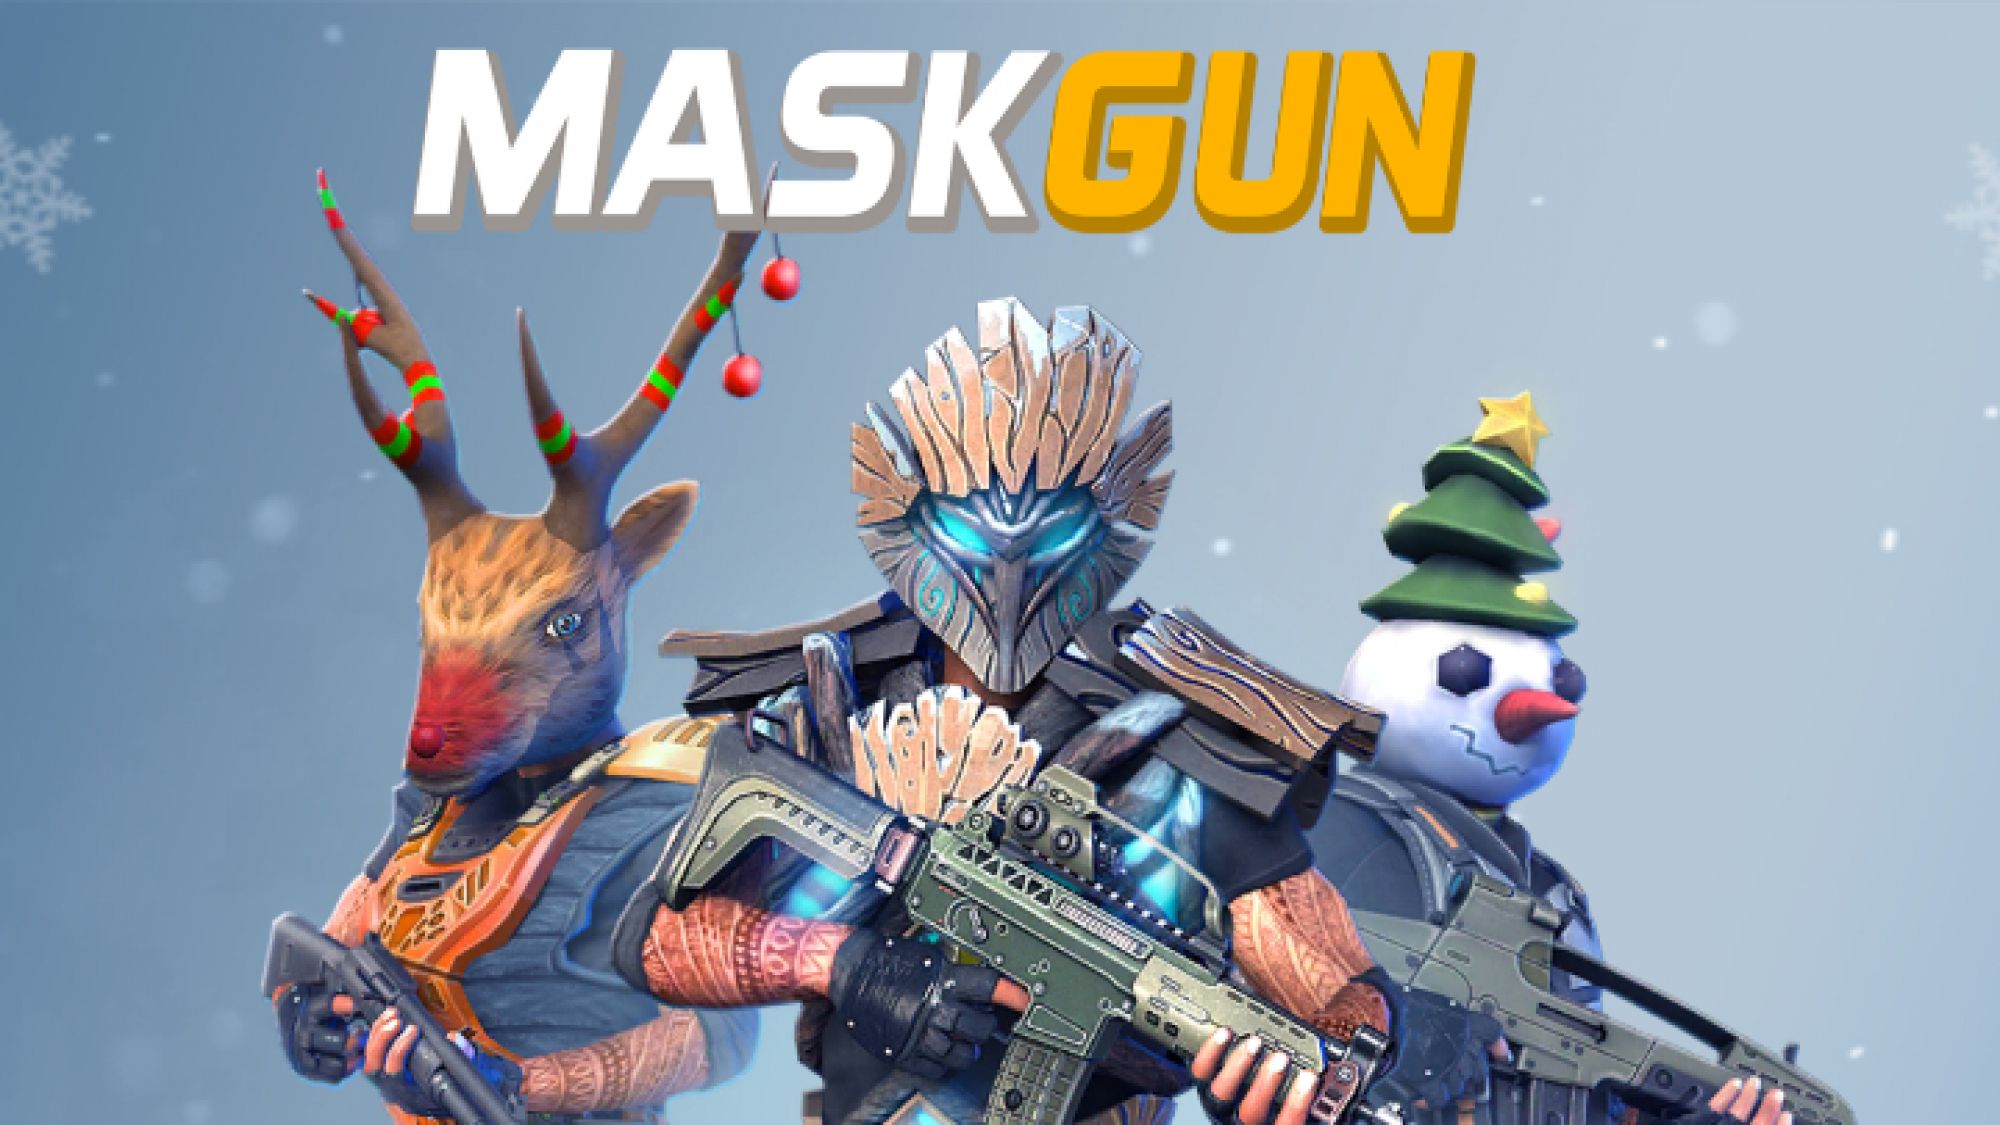 MaskGun Multiplayer FPS 2019 Mod Generator Free Diamonds February /maskgun Multiplayer Fps 2019. Fps, Fps Games, Generation